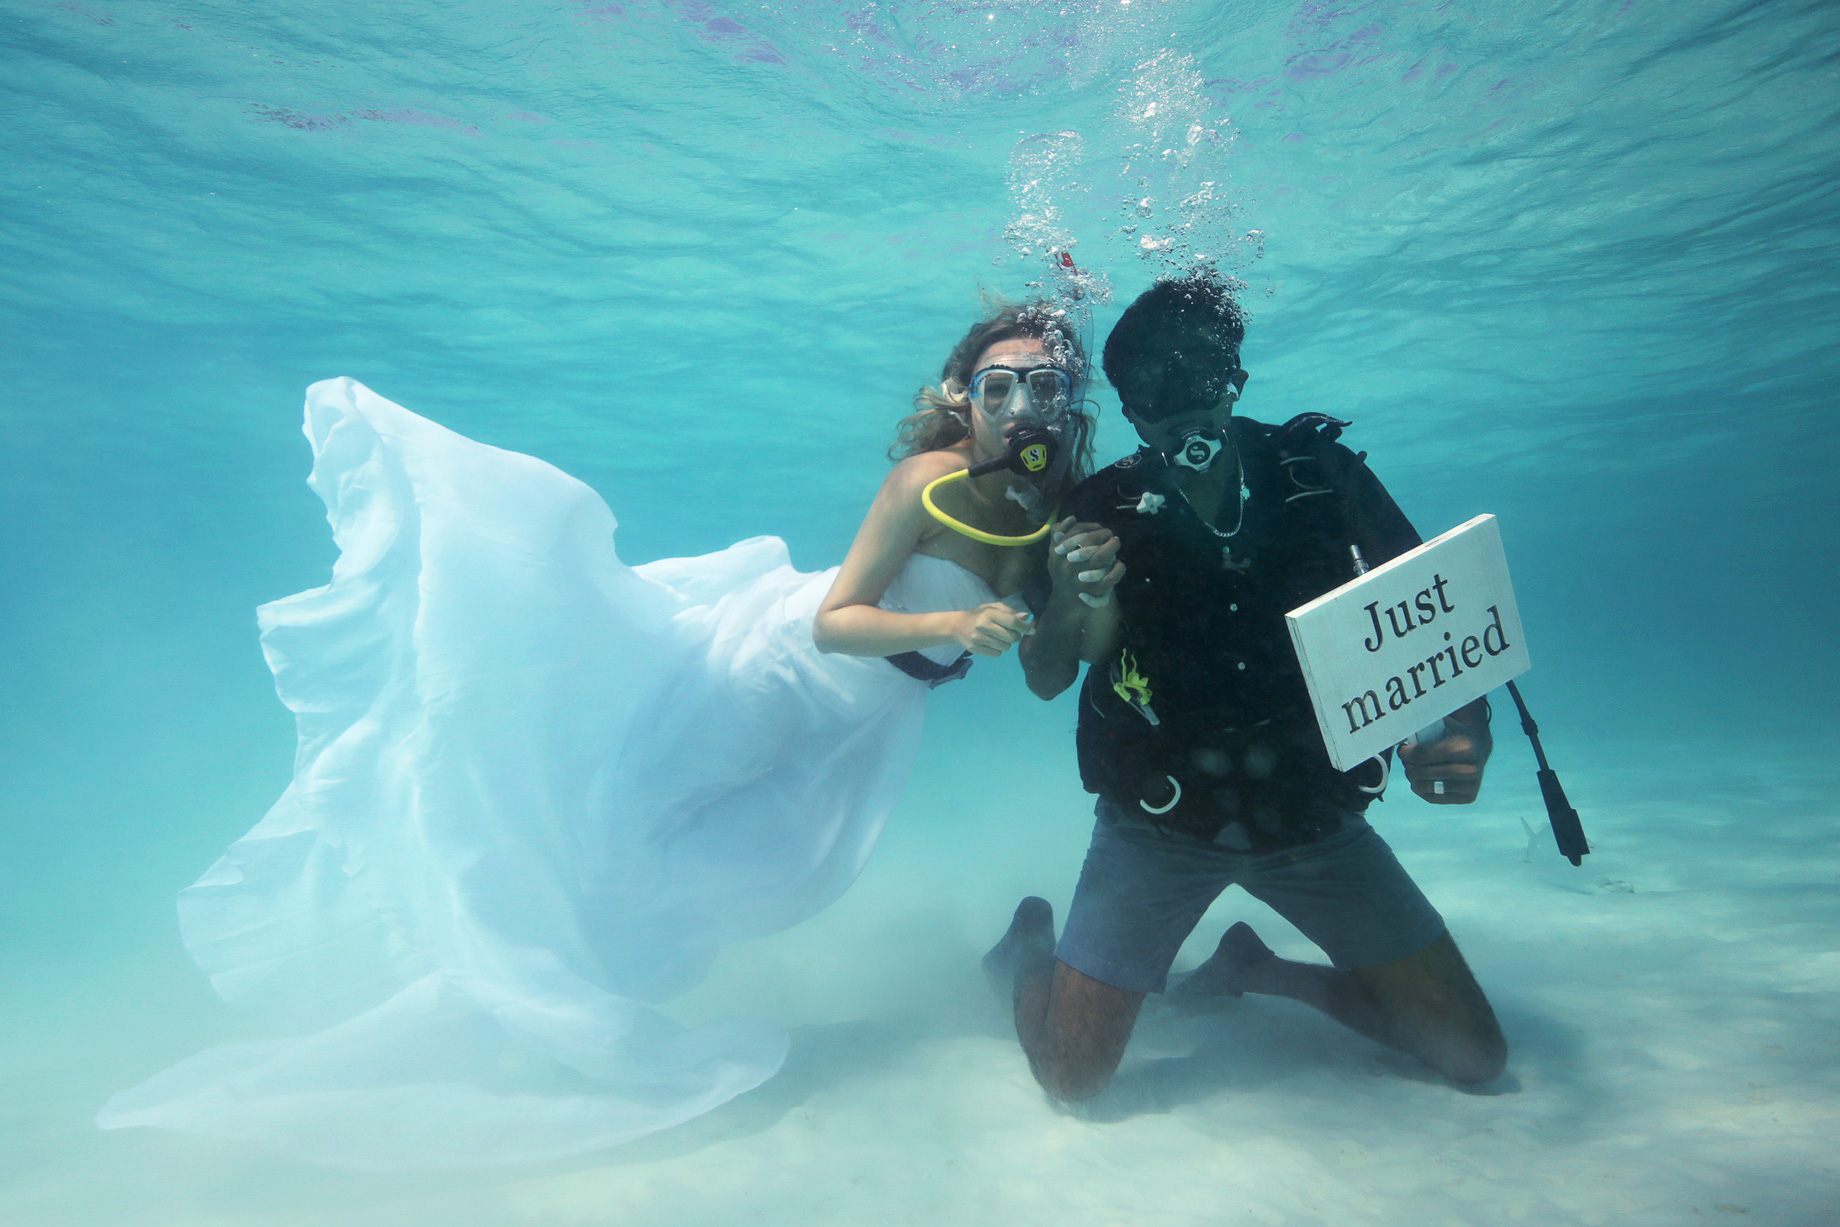 Anantara Kihavah Maldives Villas Resort – Baa Atoll, Maldives – Underwater Wedding